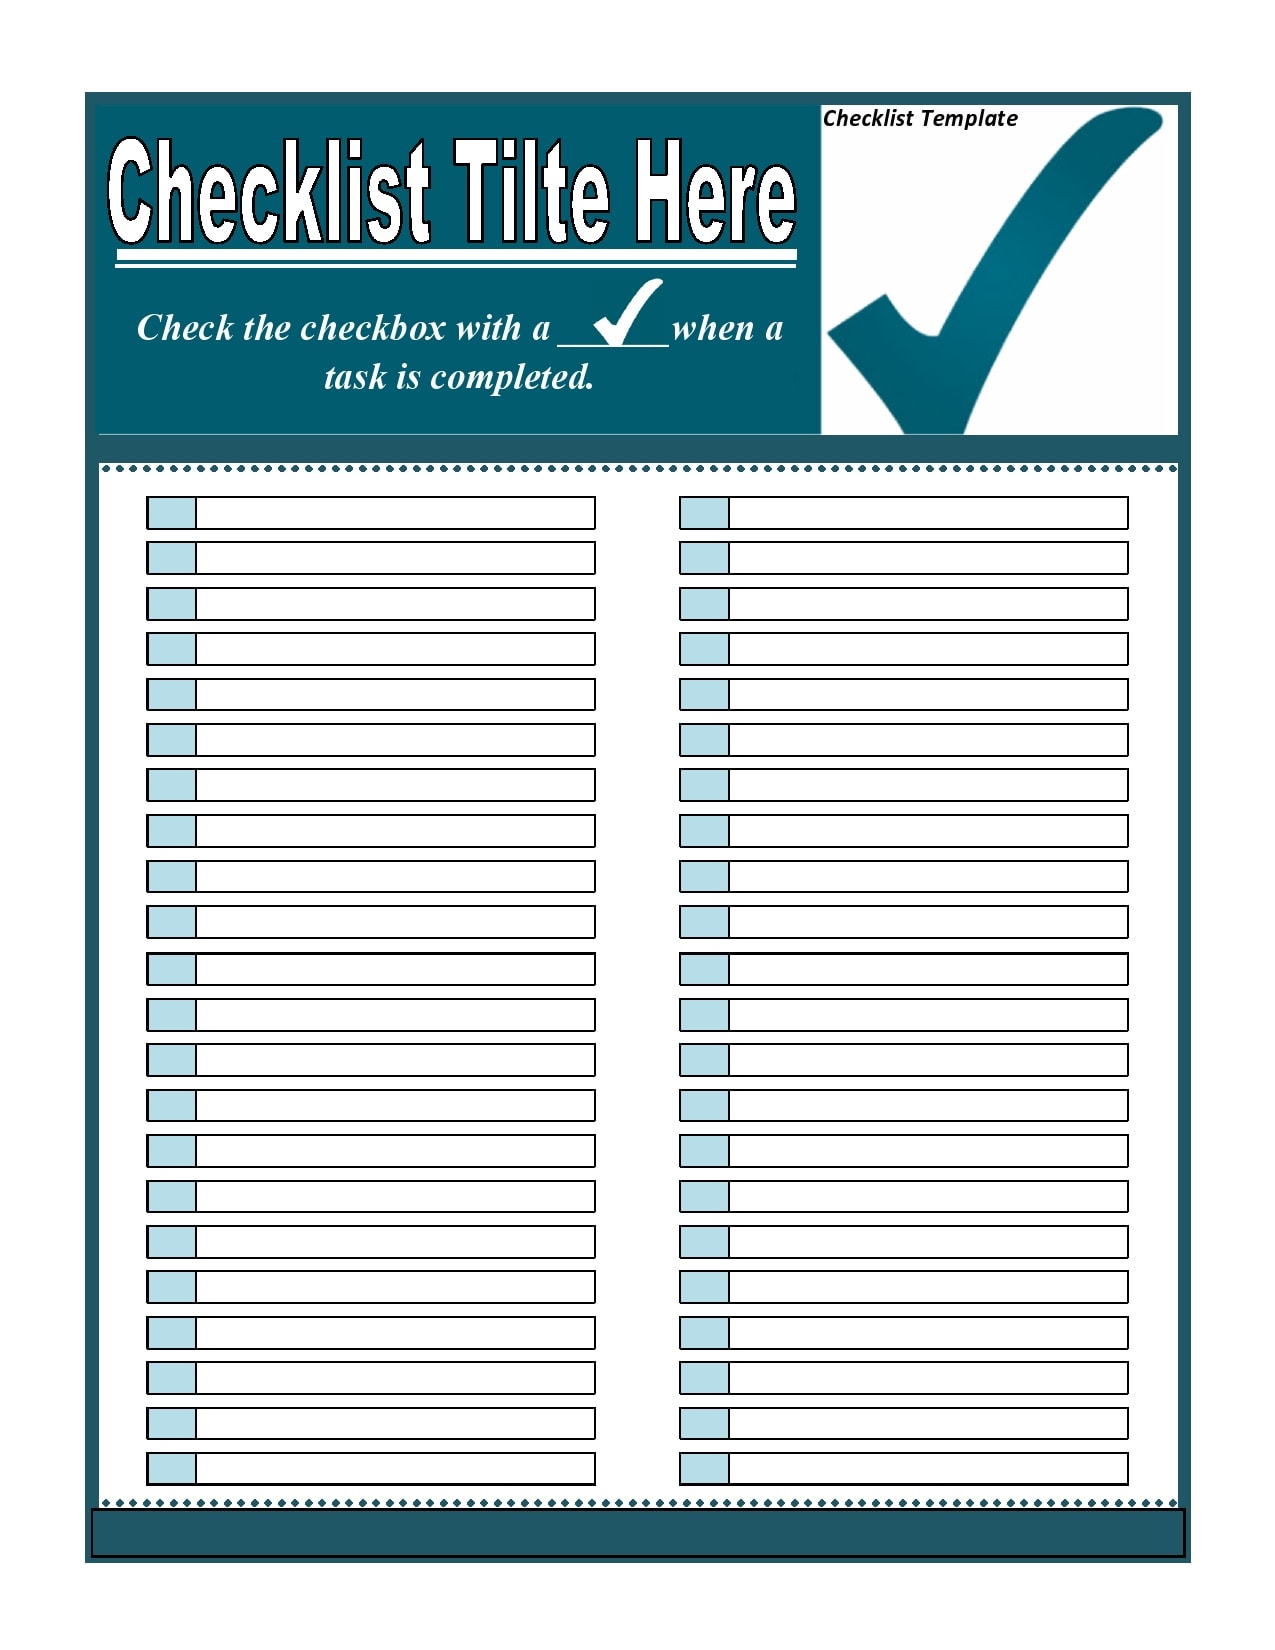 23 Free Checklist Templates (Word, Excel) - PrintableTemplates In Blank Checklist Template Word